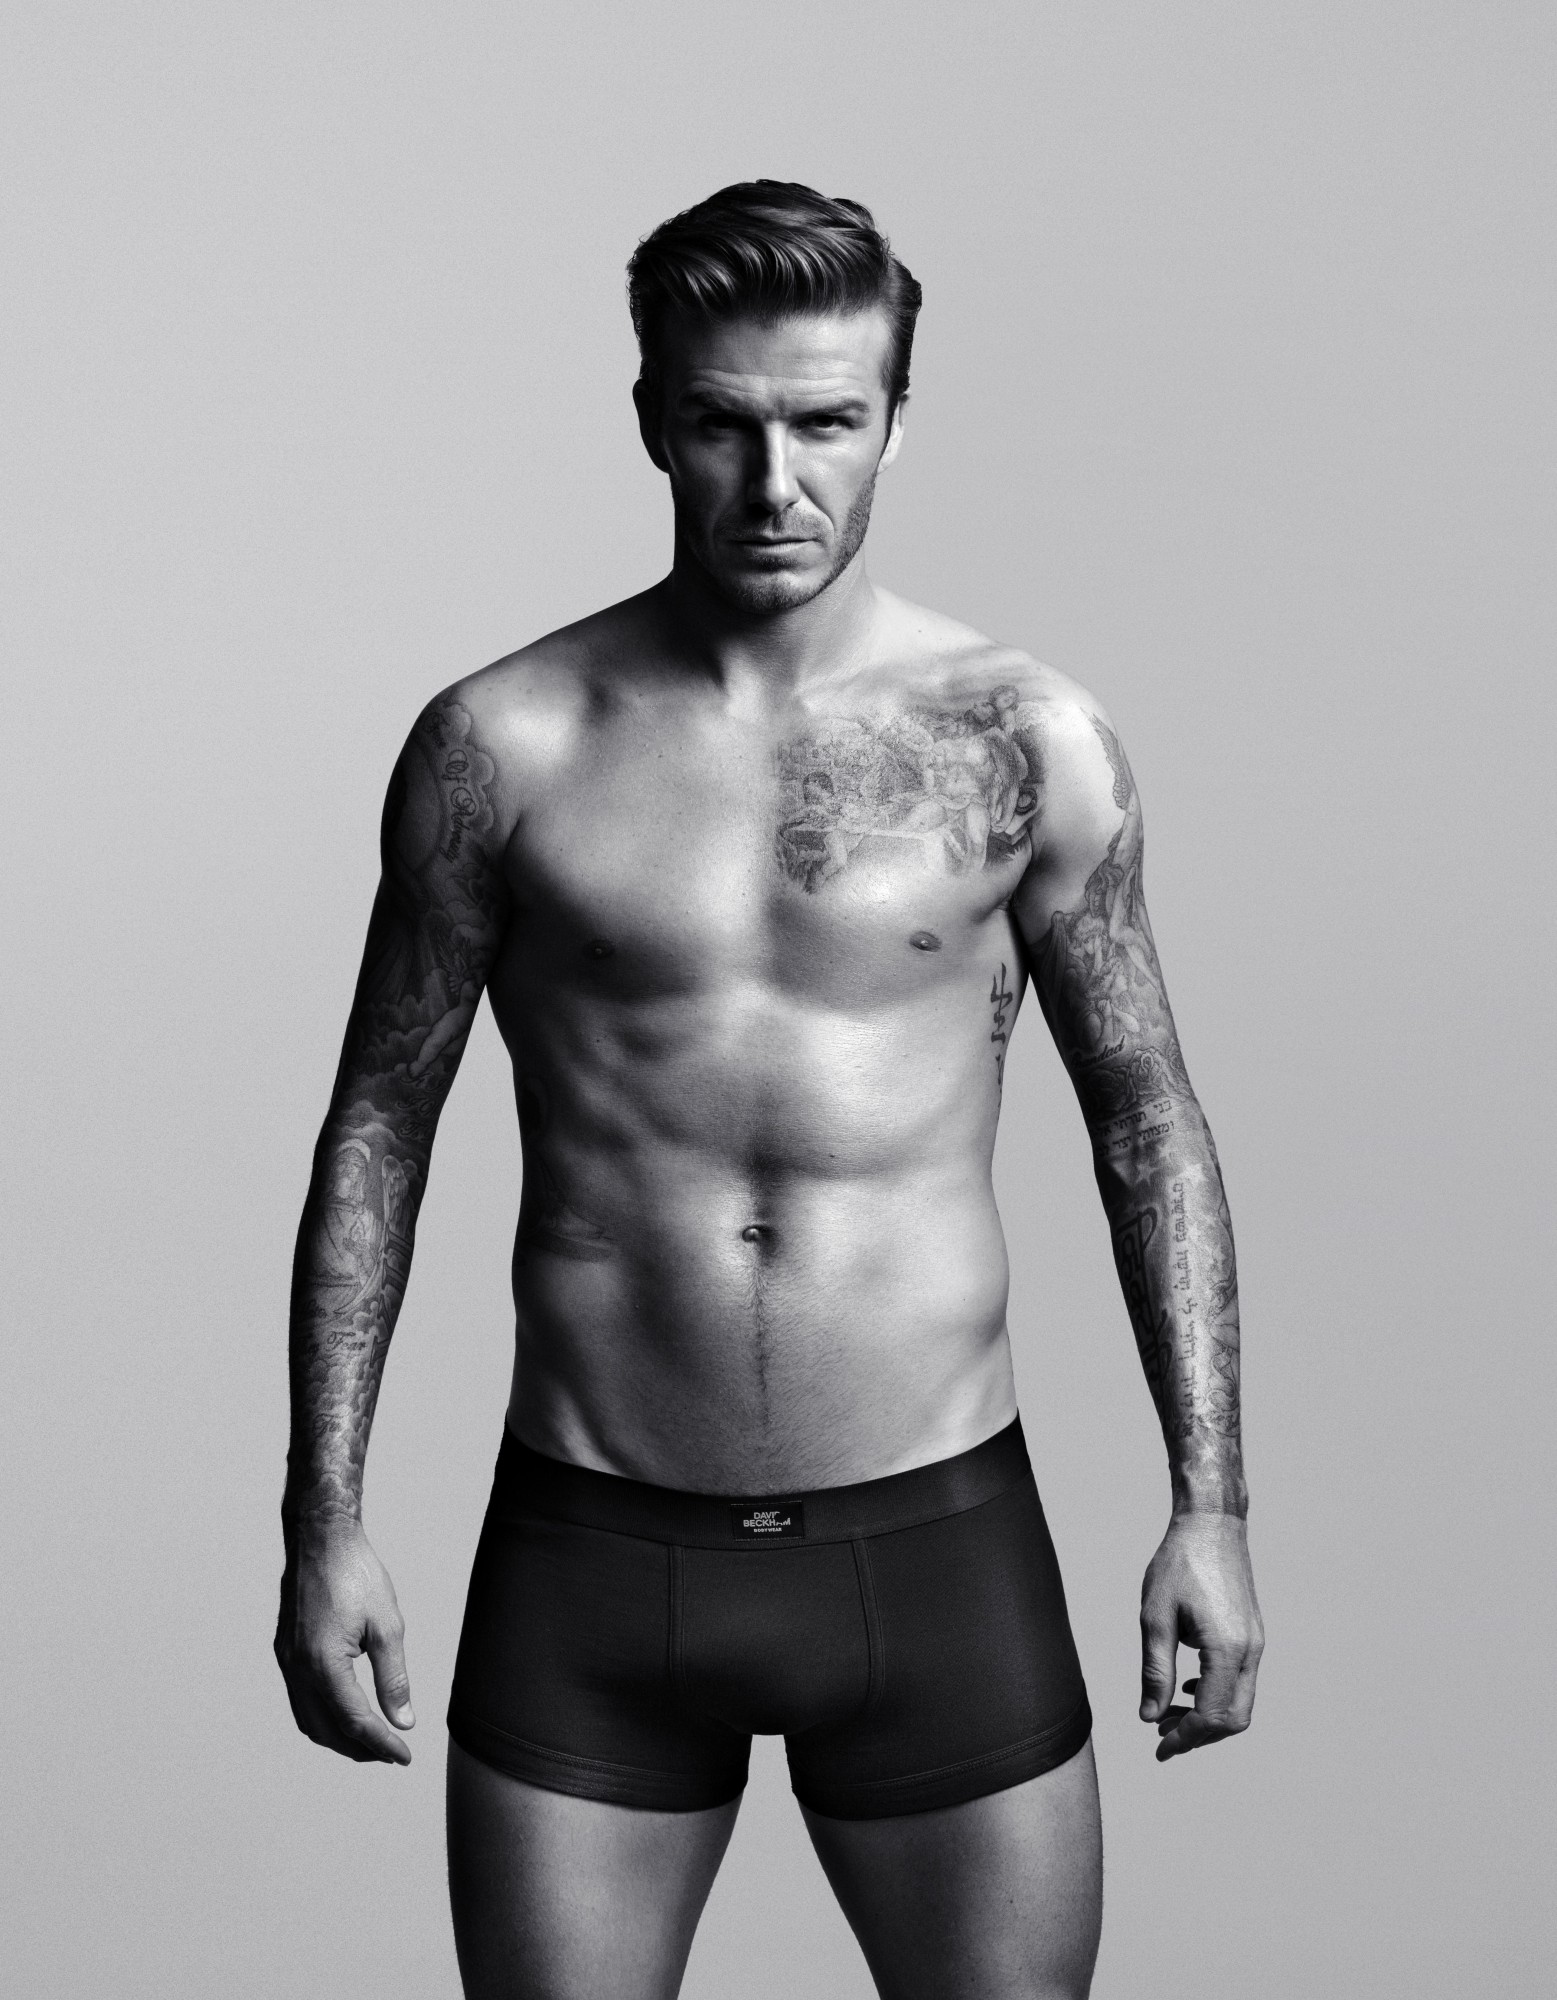 david s on David Beckham Bodywear Collection For H M Photos  H M David Beckham